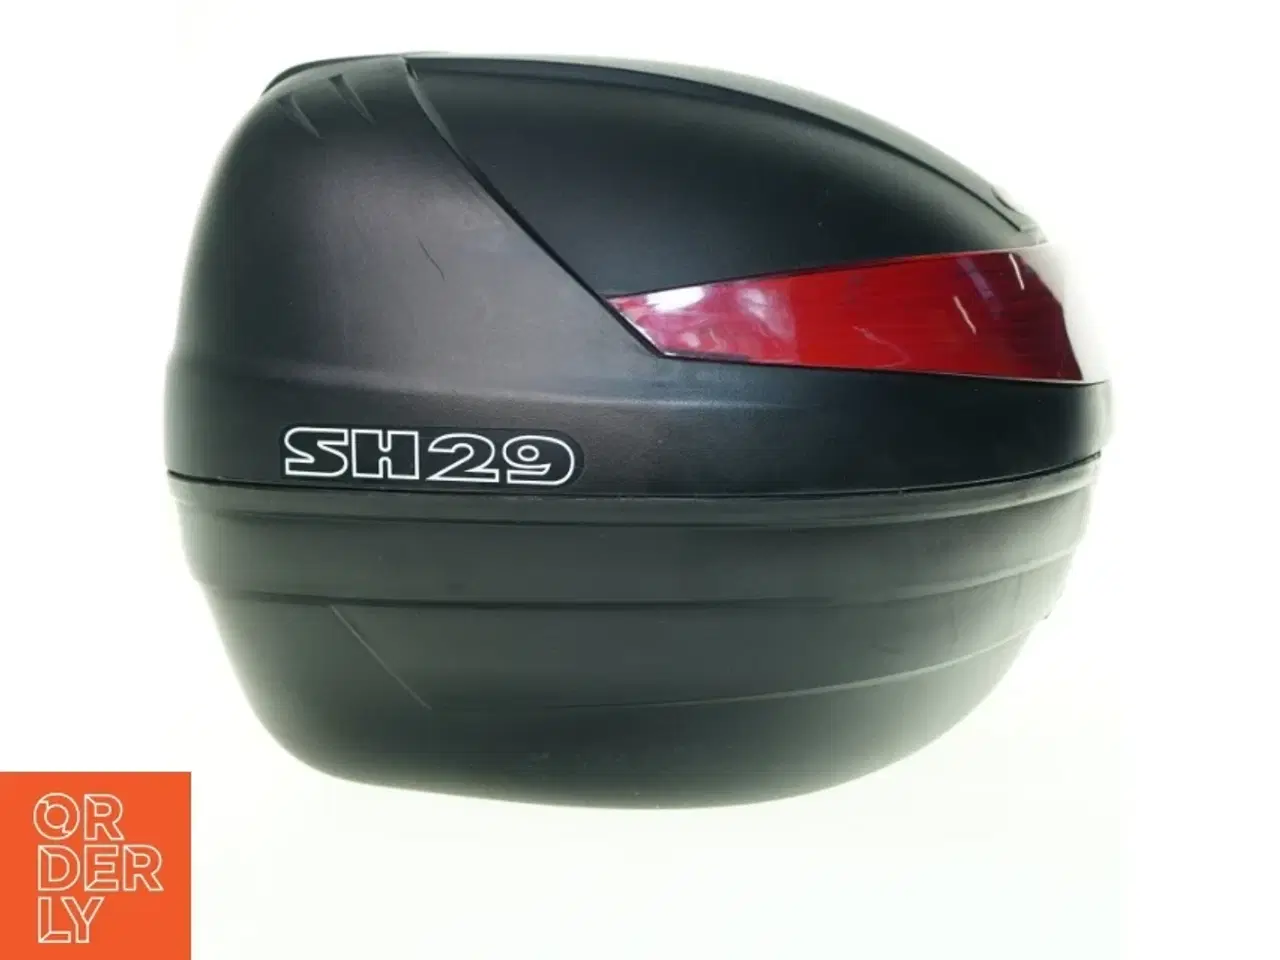 Billede 1 - UBRUGT Motorcykel topboks SH29 fra Shad (str. 35 x 4 x 28 cm)